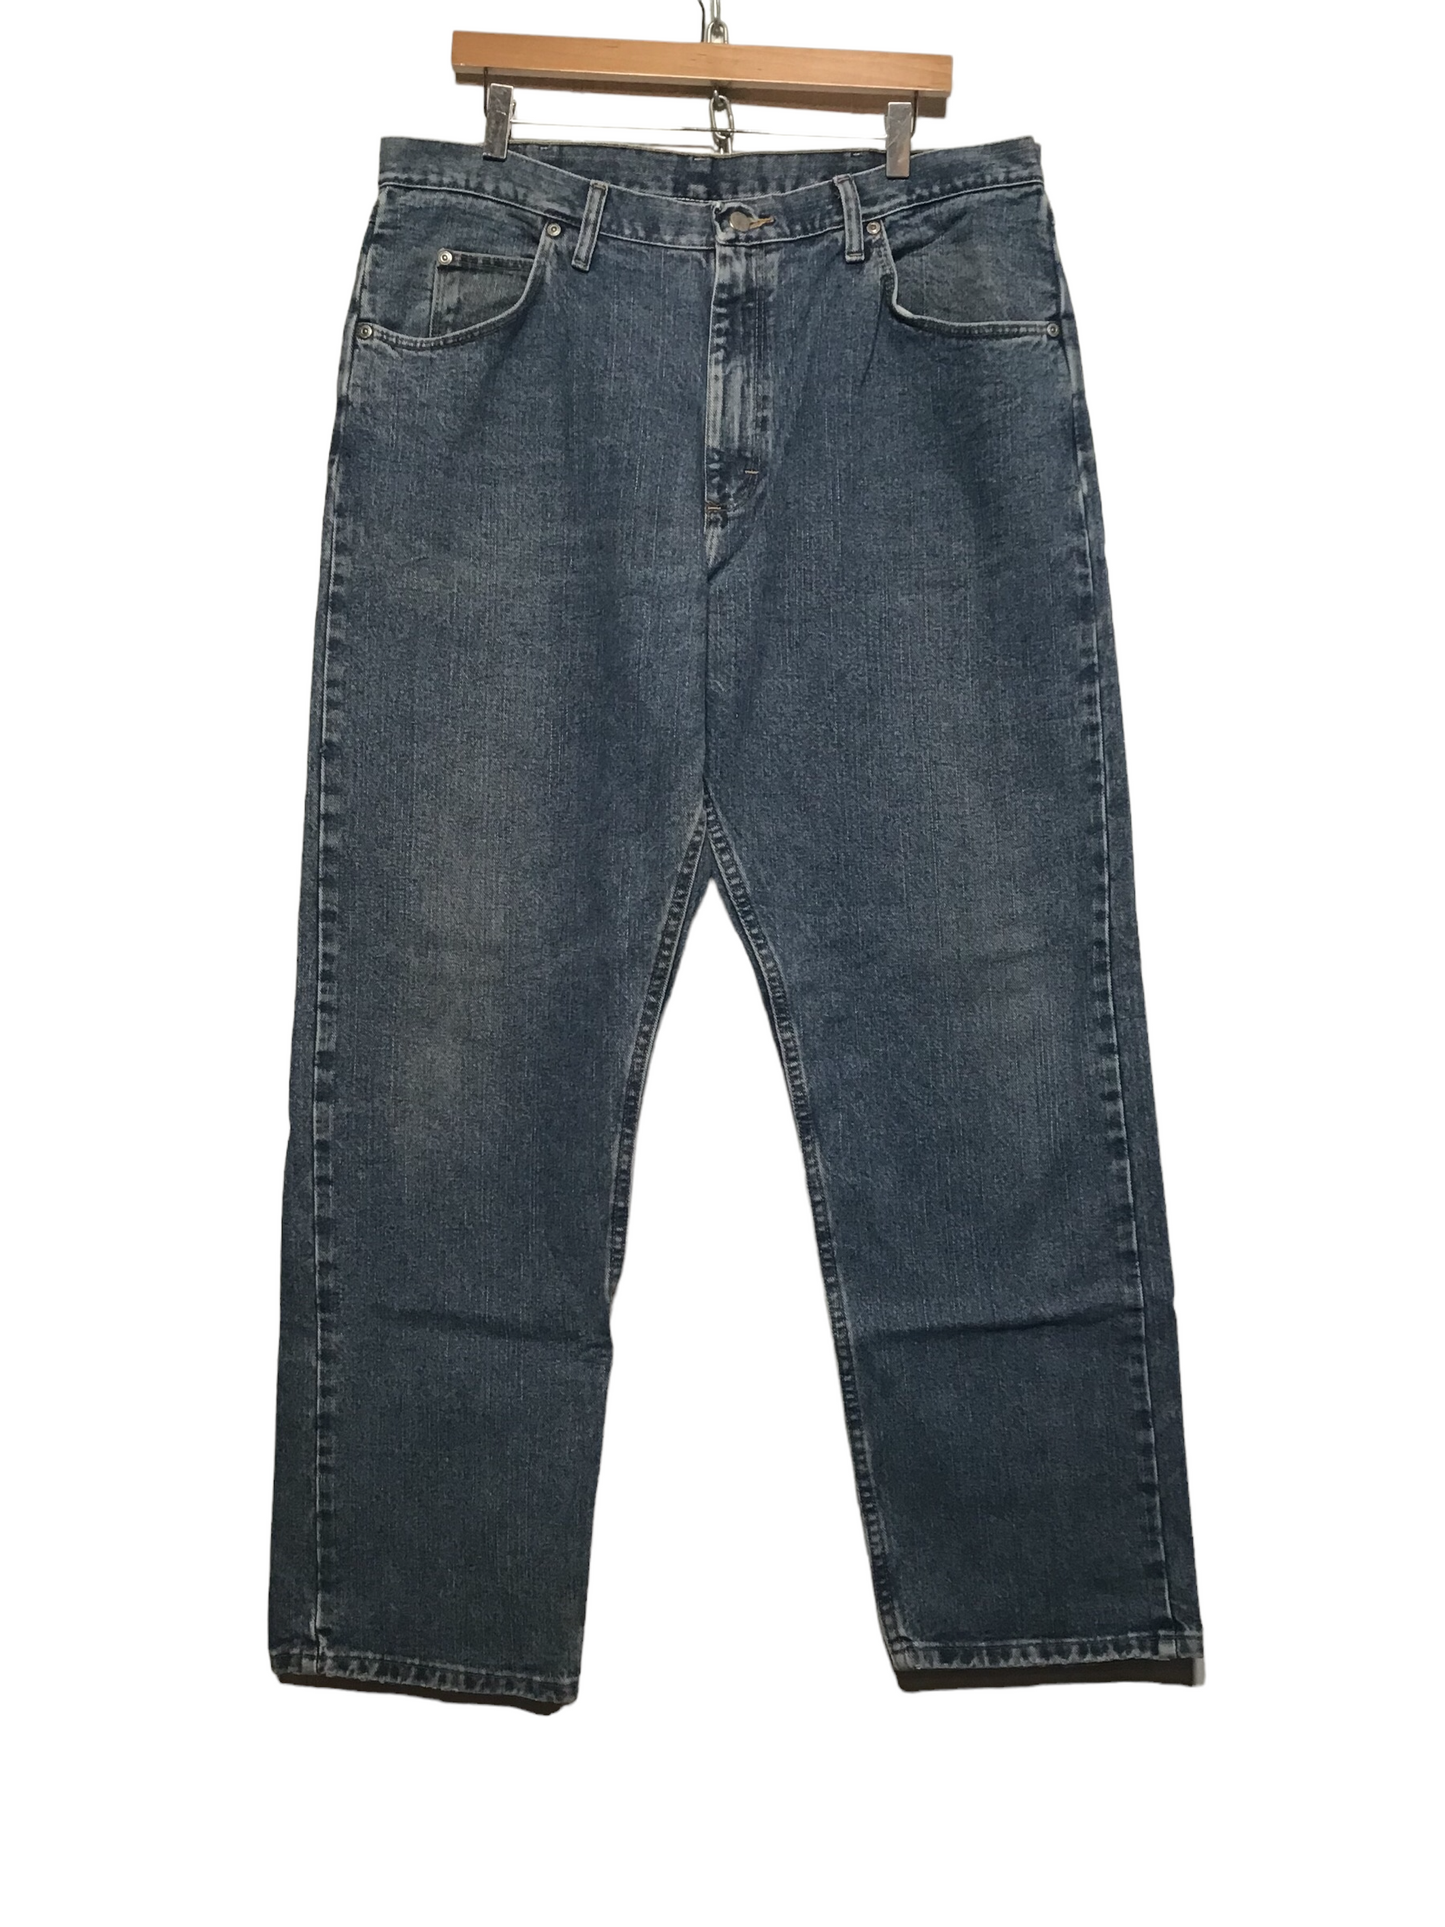 Wrangler Jeans (38X32)